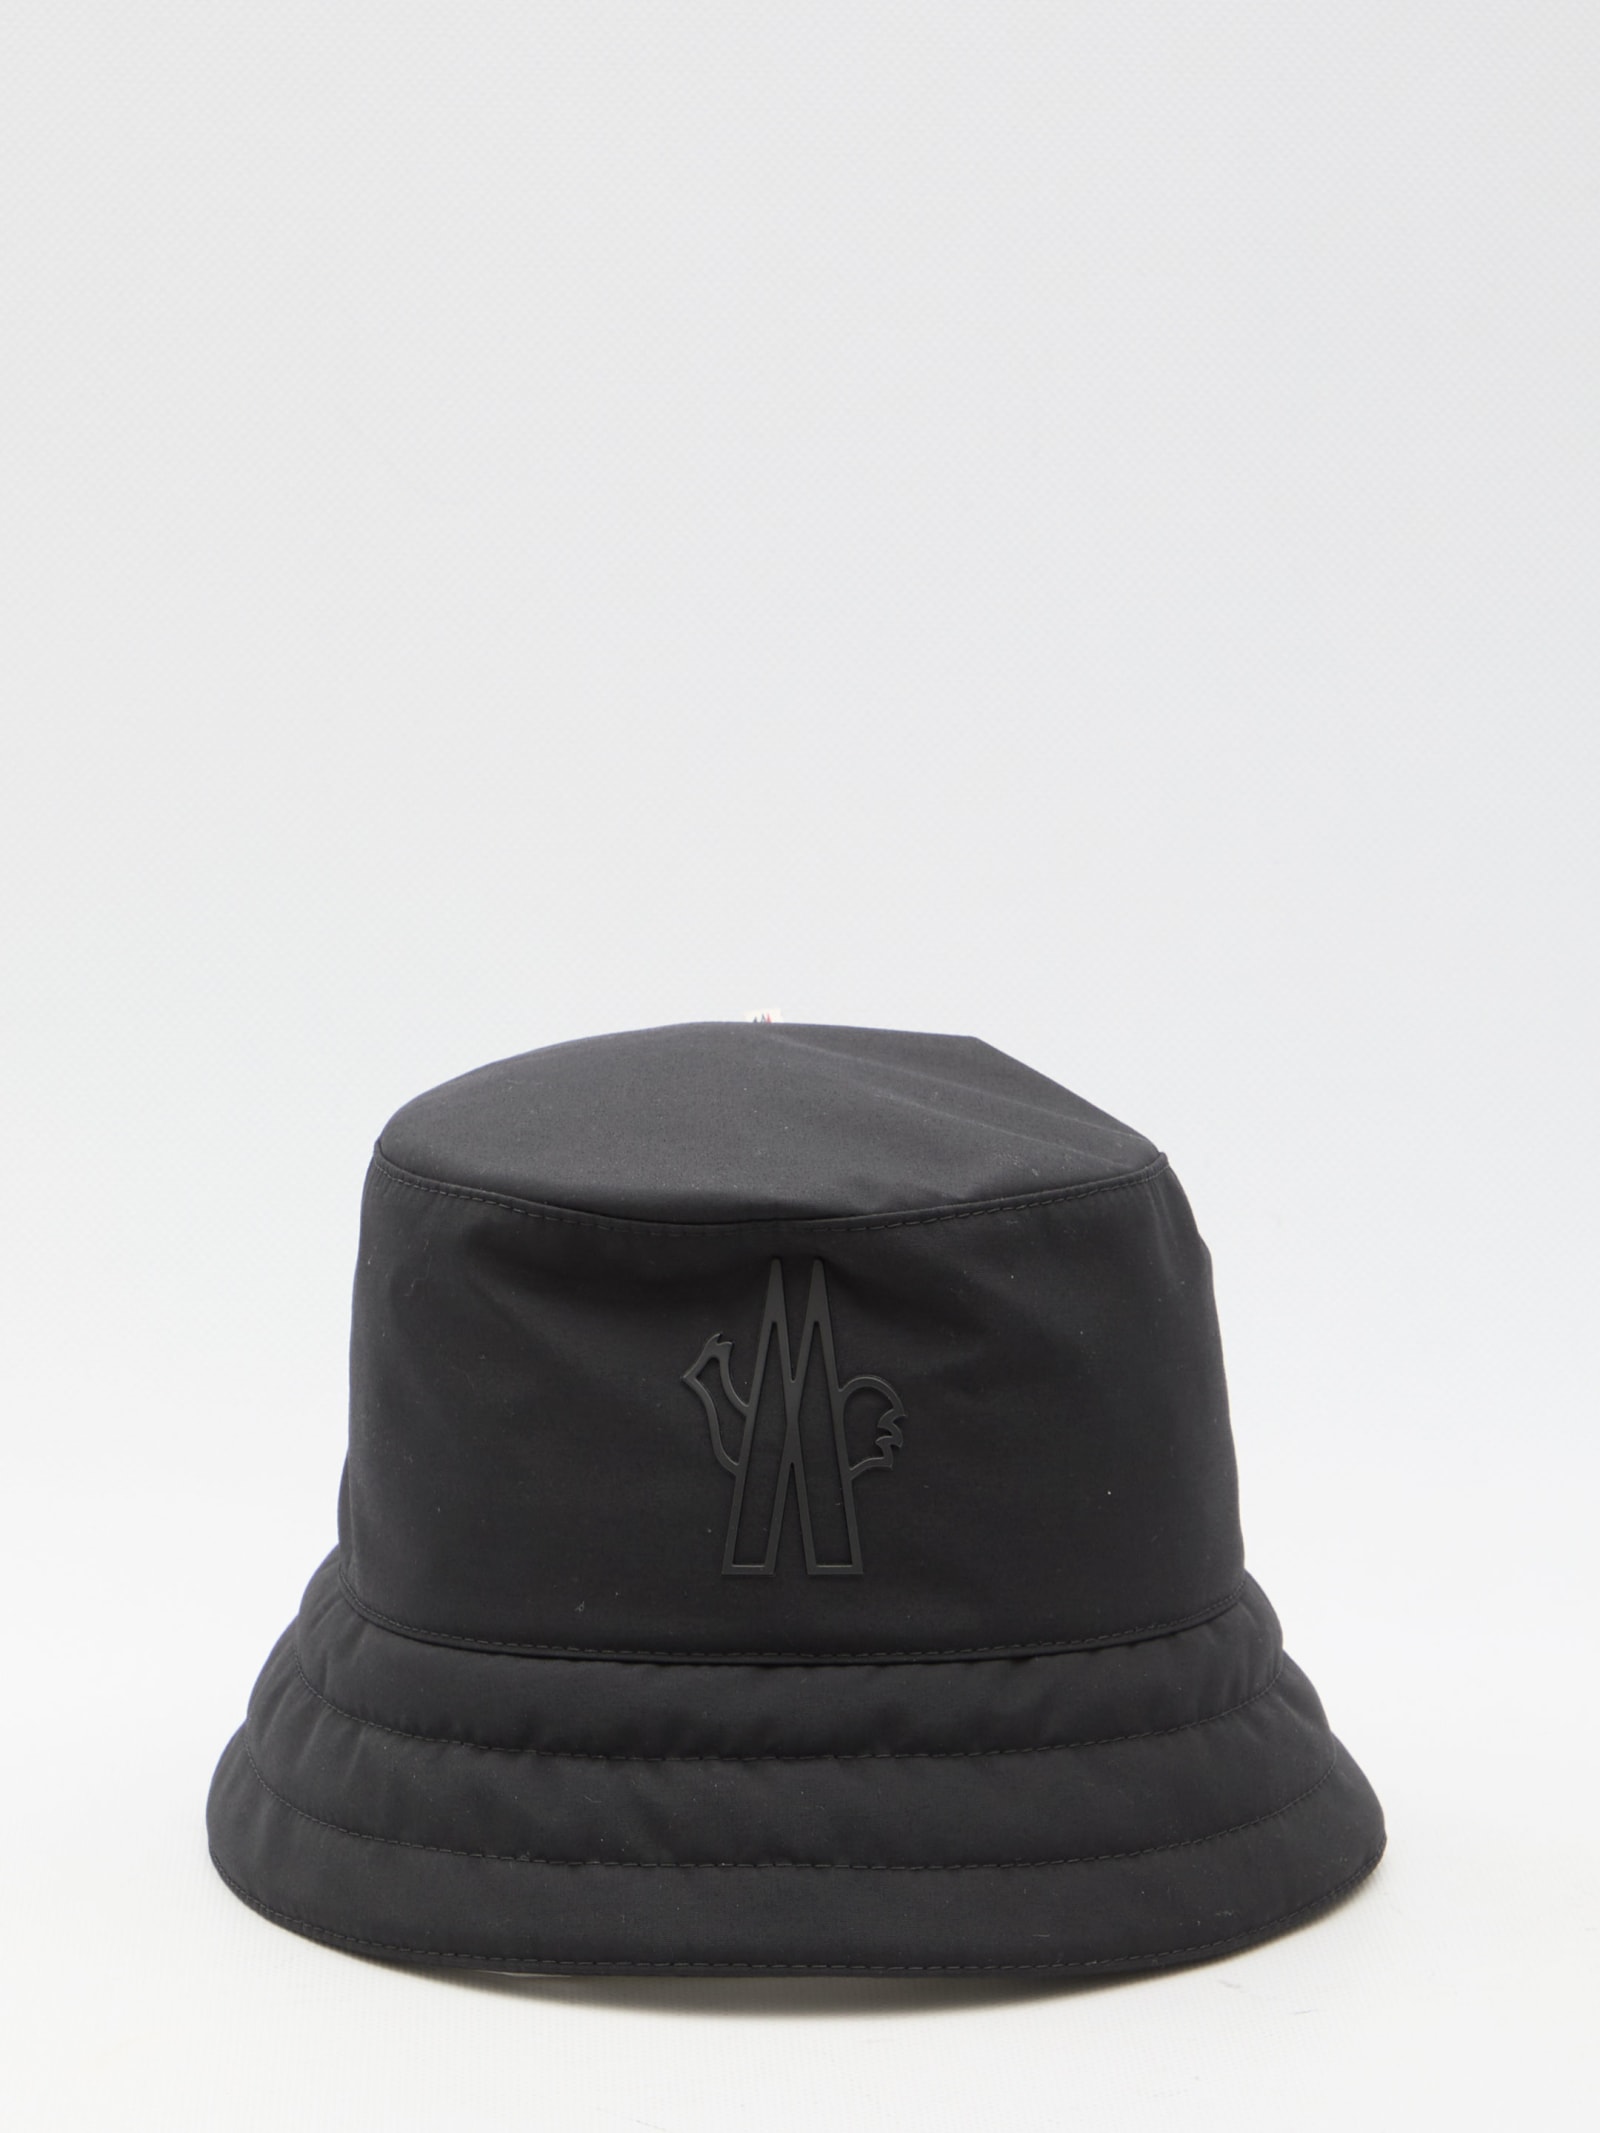 Moncler Grenoble Bucket Hat